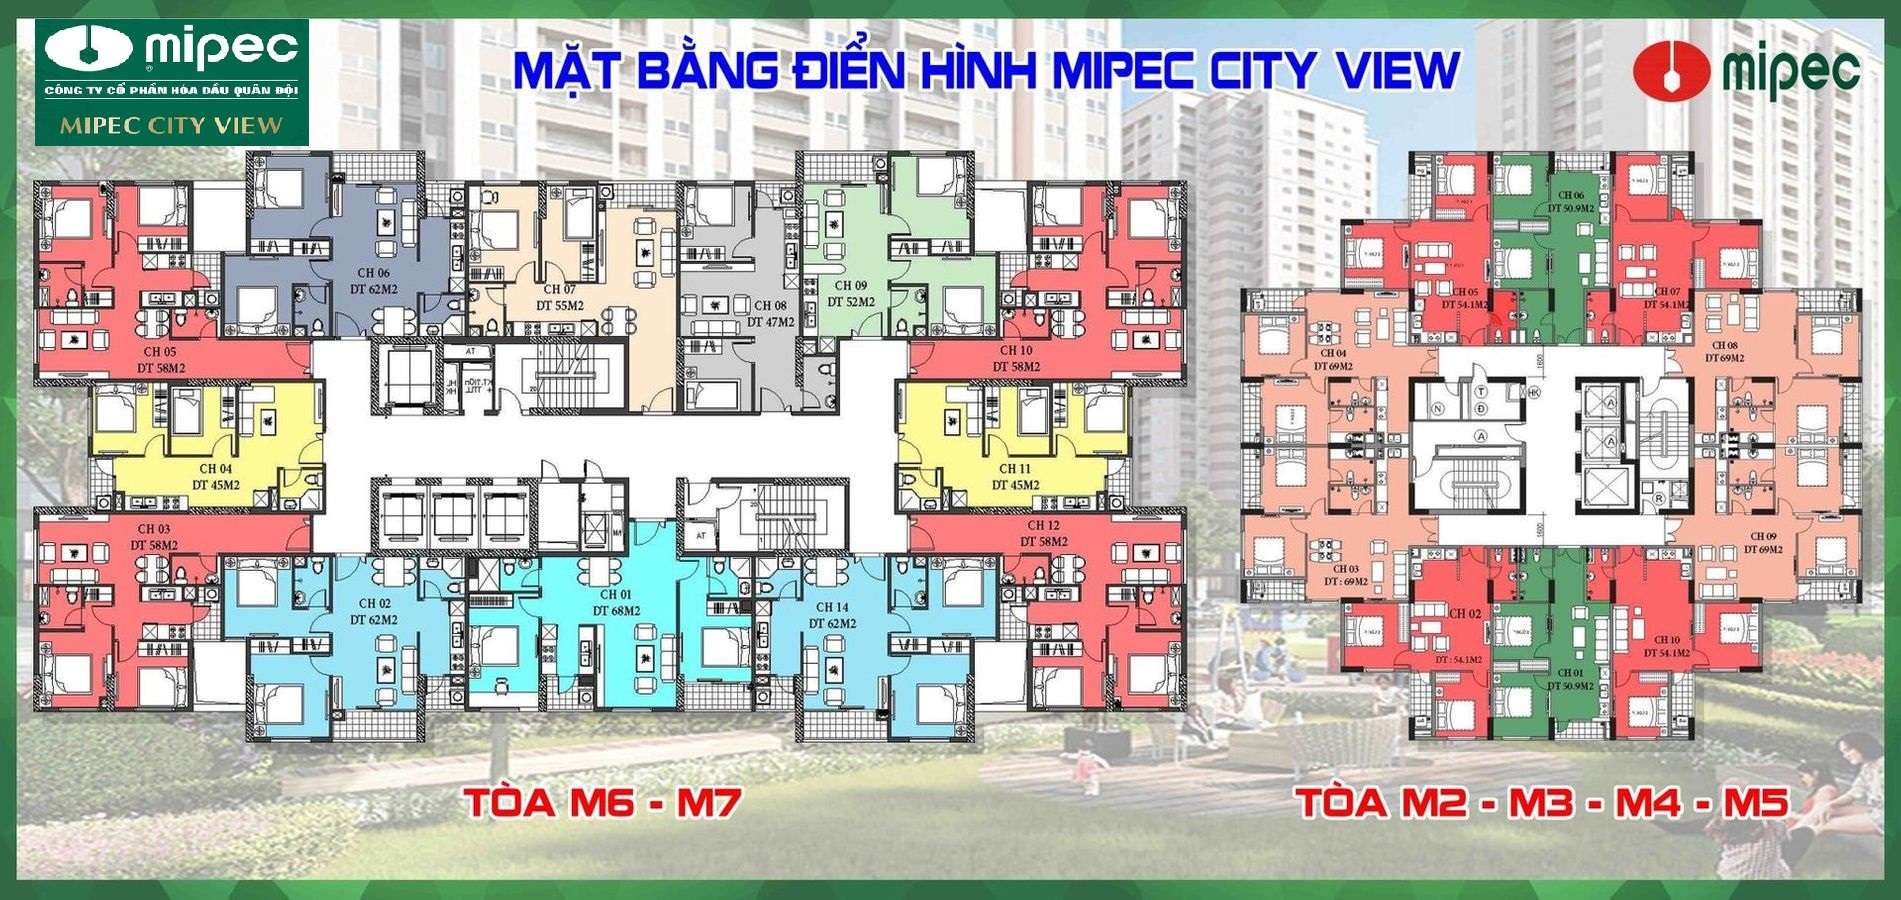 Mặt bằng thiết kế Mipec View city